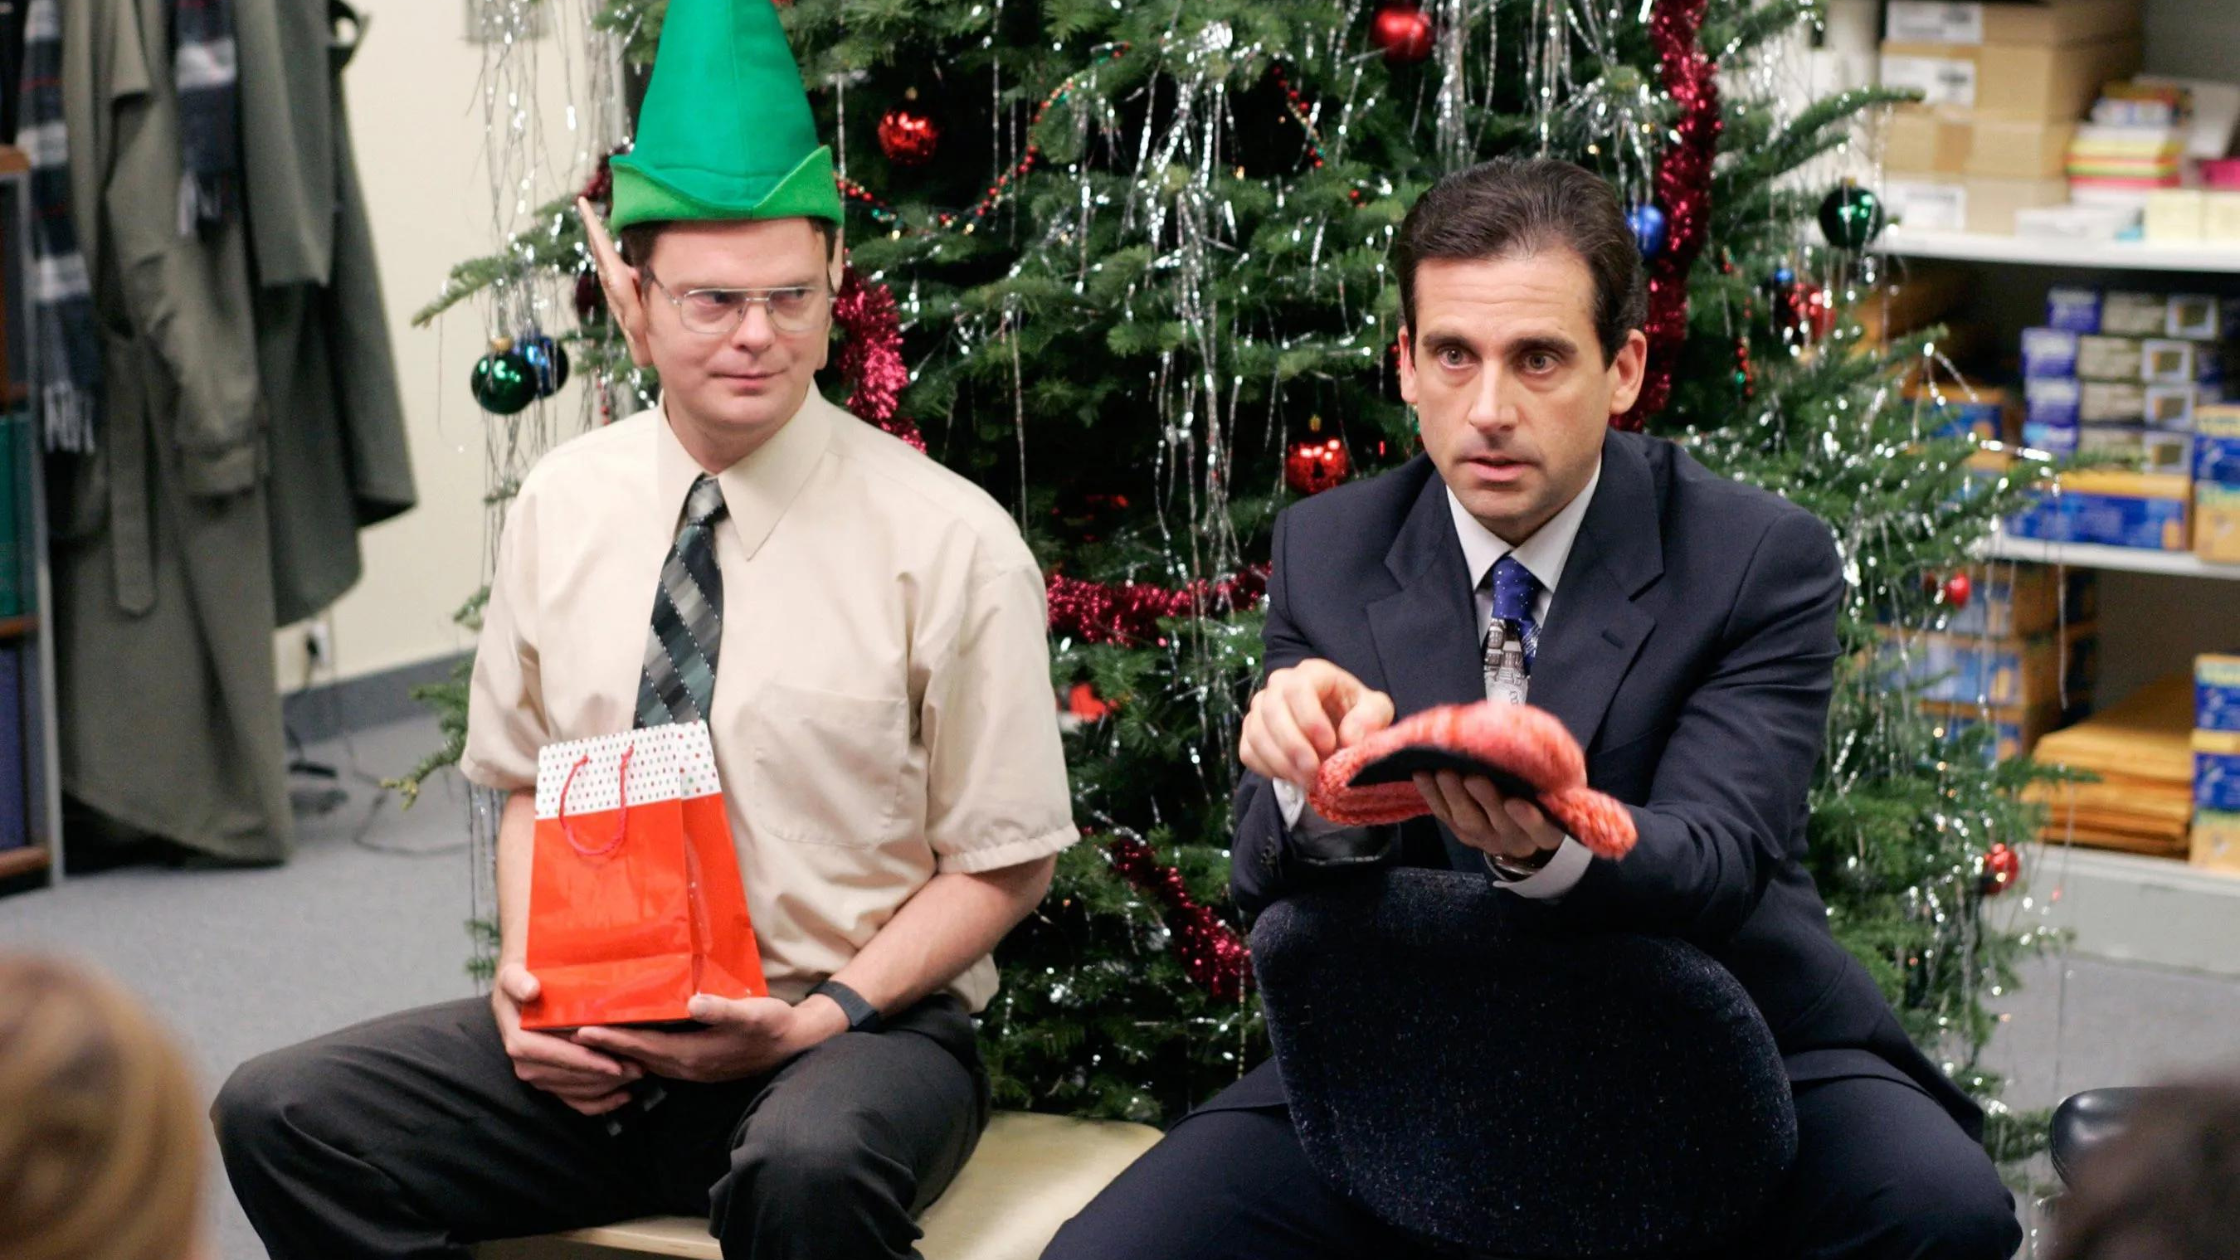 Dwinght y Michael en The Office. Evita ser pelota en la cena de empresa de navidad